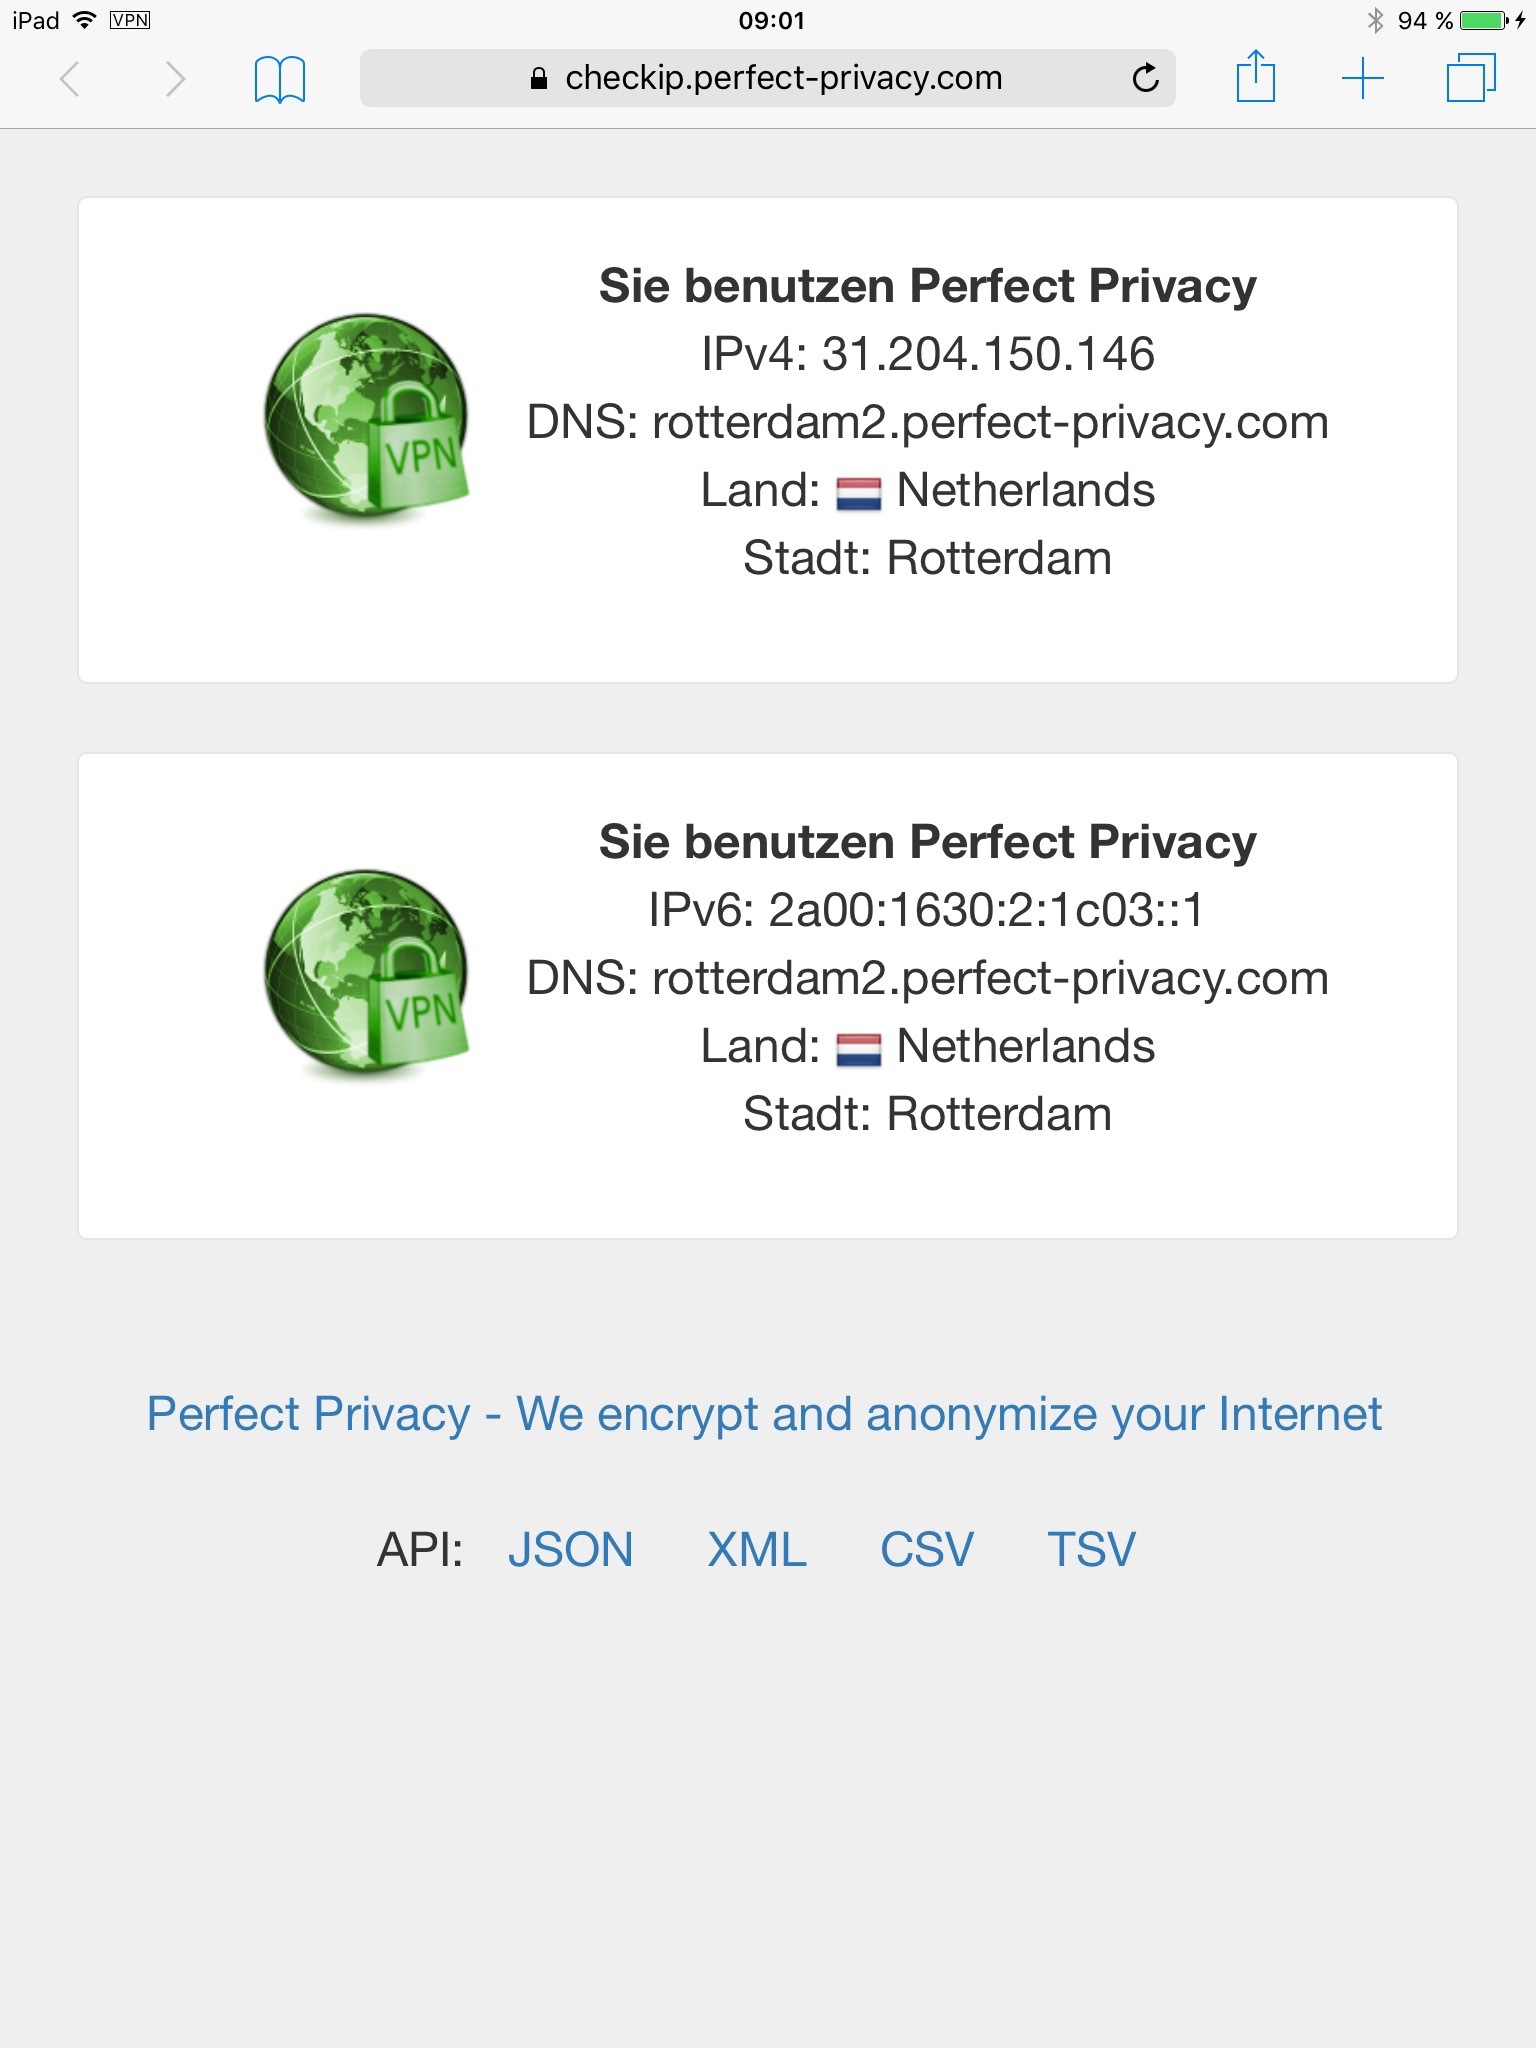 Perfect Privacy Check-IP | Always-On VPN mit iPhone und iPad